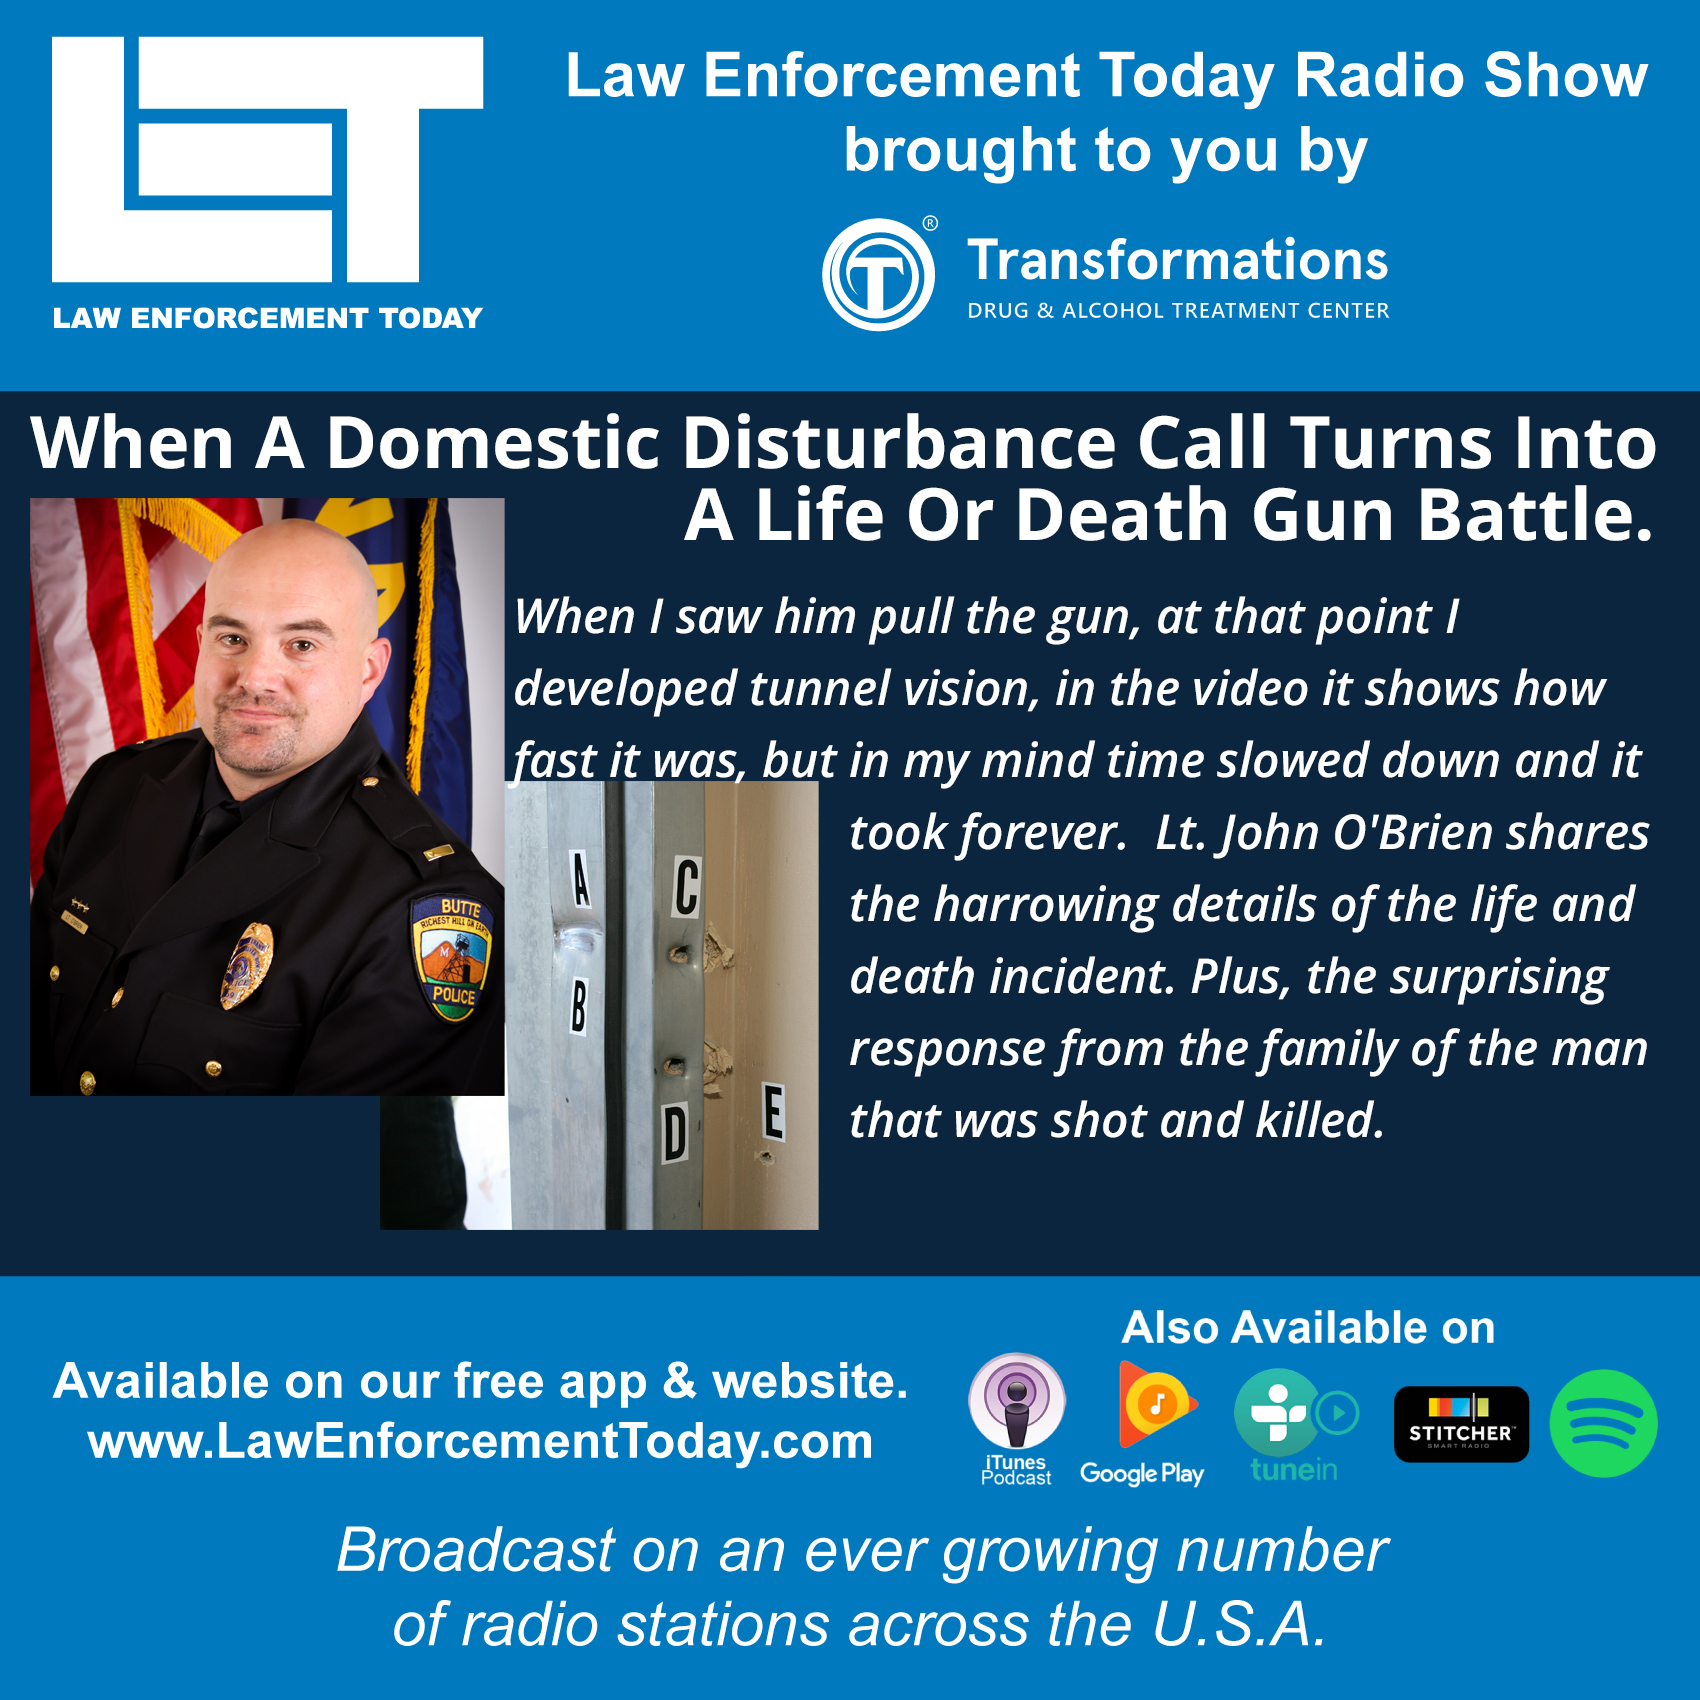 S3E54: Life Or Death Battle On Domestic Disturbance Call.